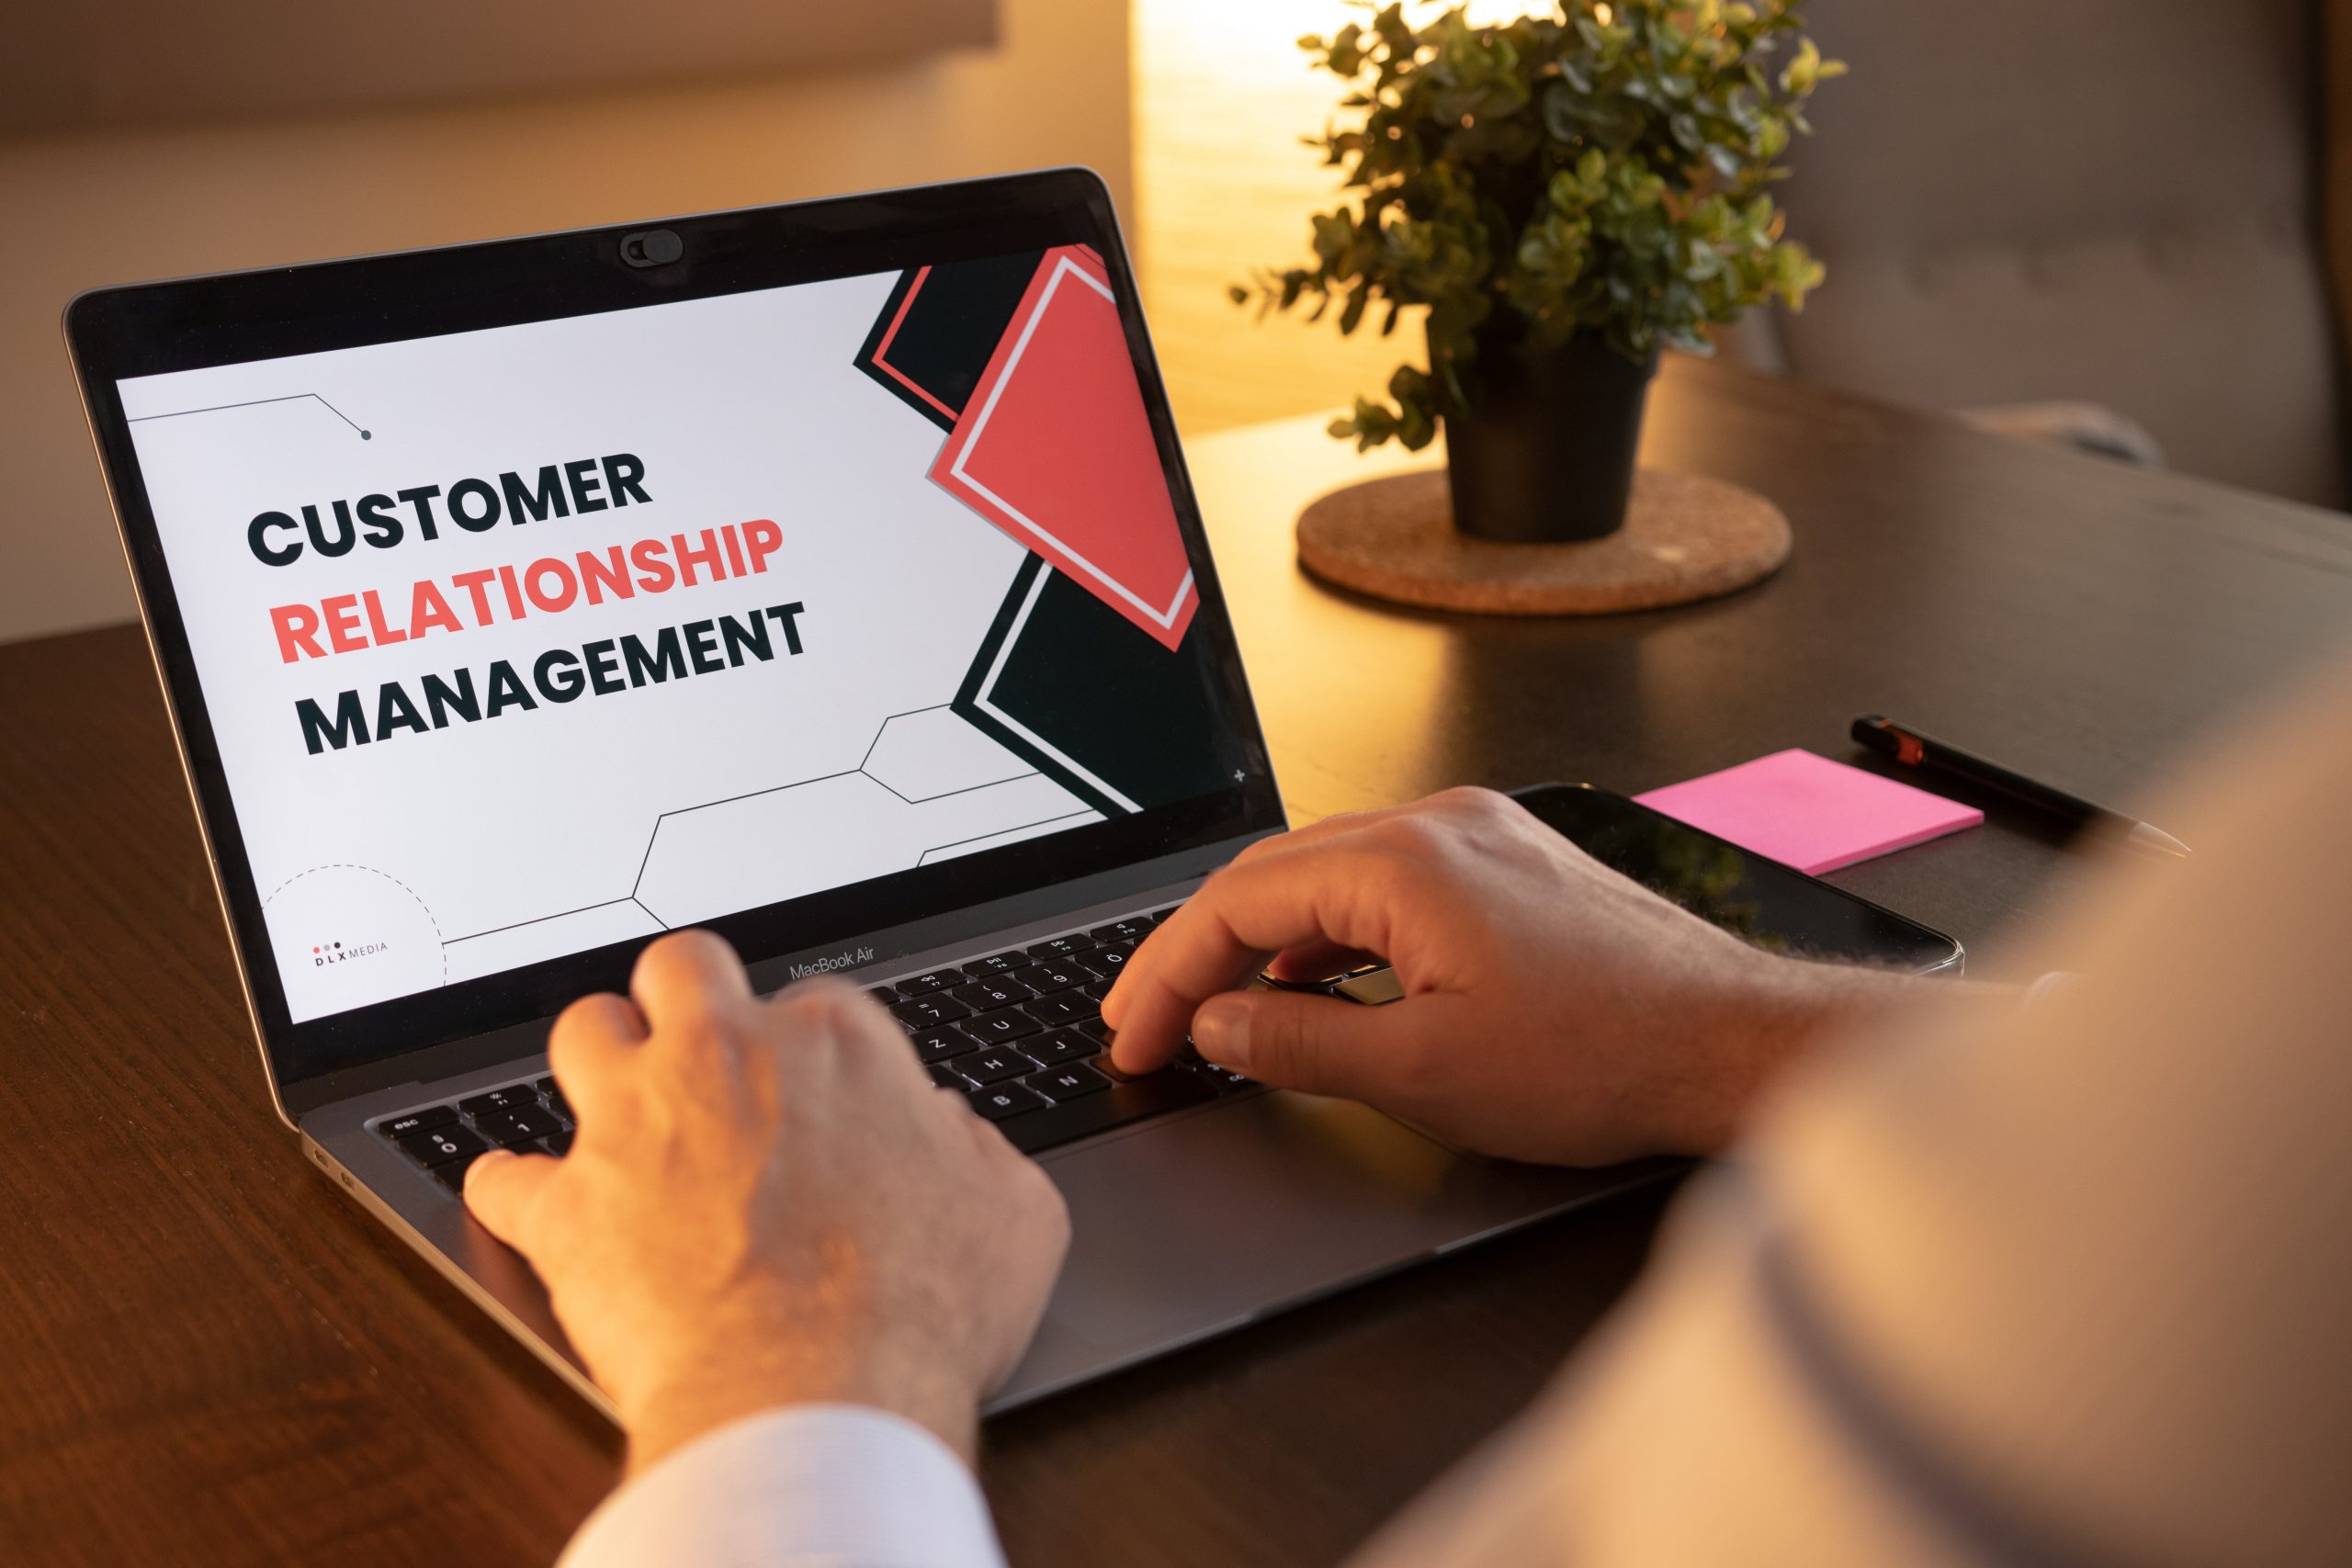 Customer relationship management on laptop screen